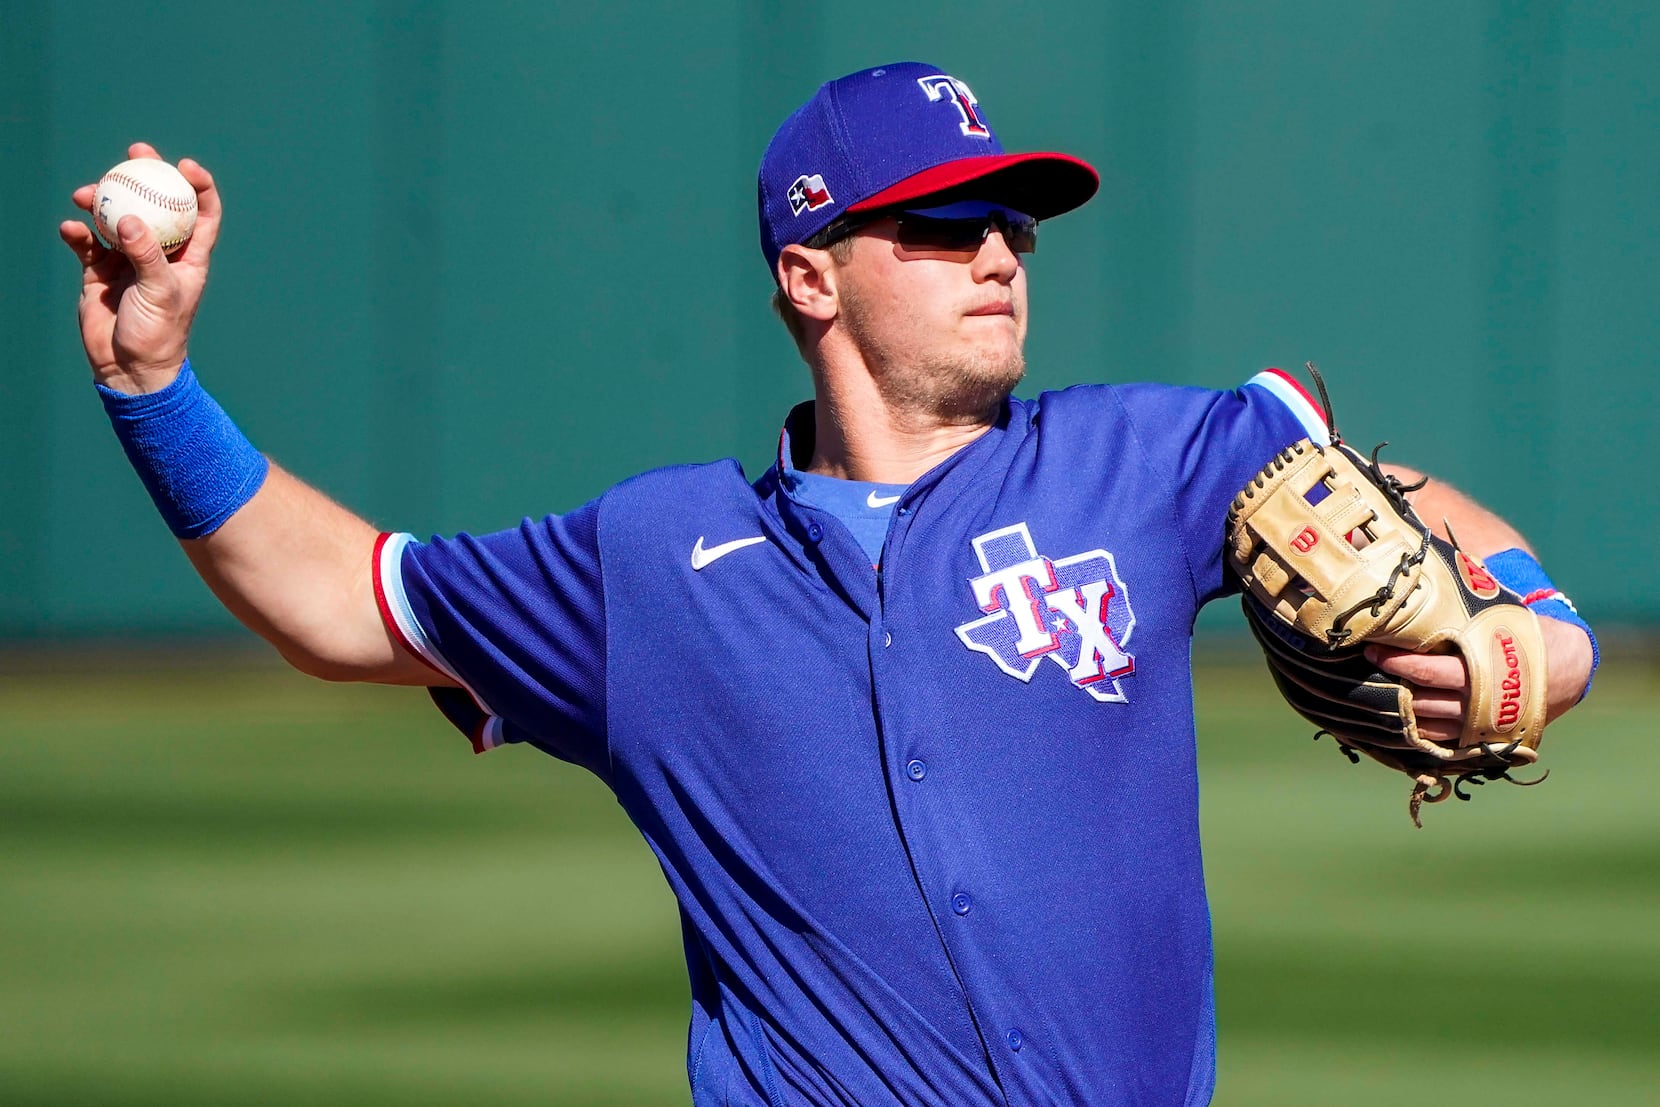 Texas Tech baseball alums: Josh Jung's season in jeopardy after